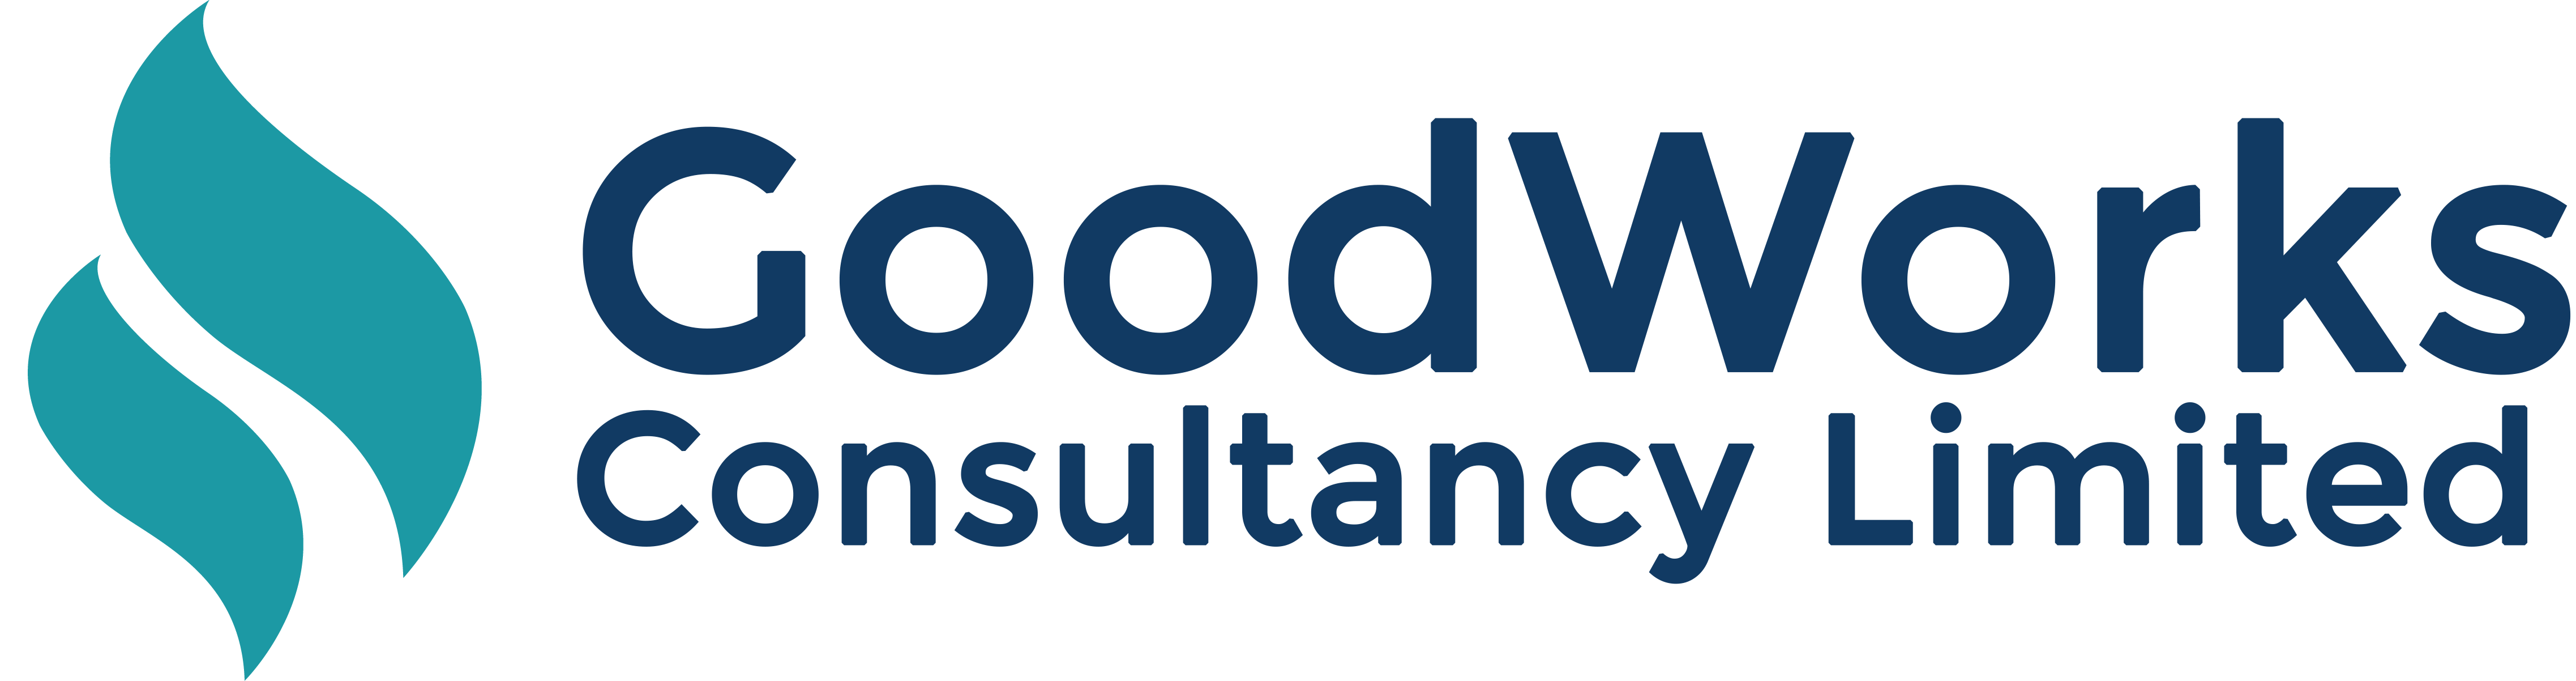 Goodworks Limited